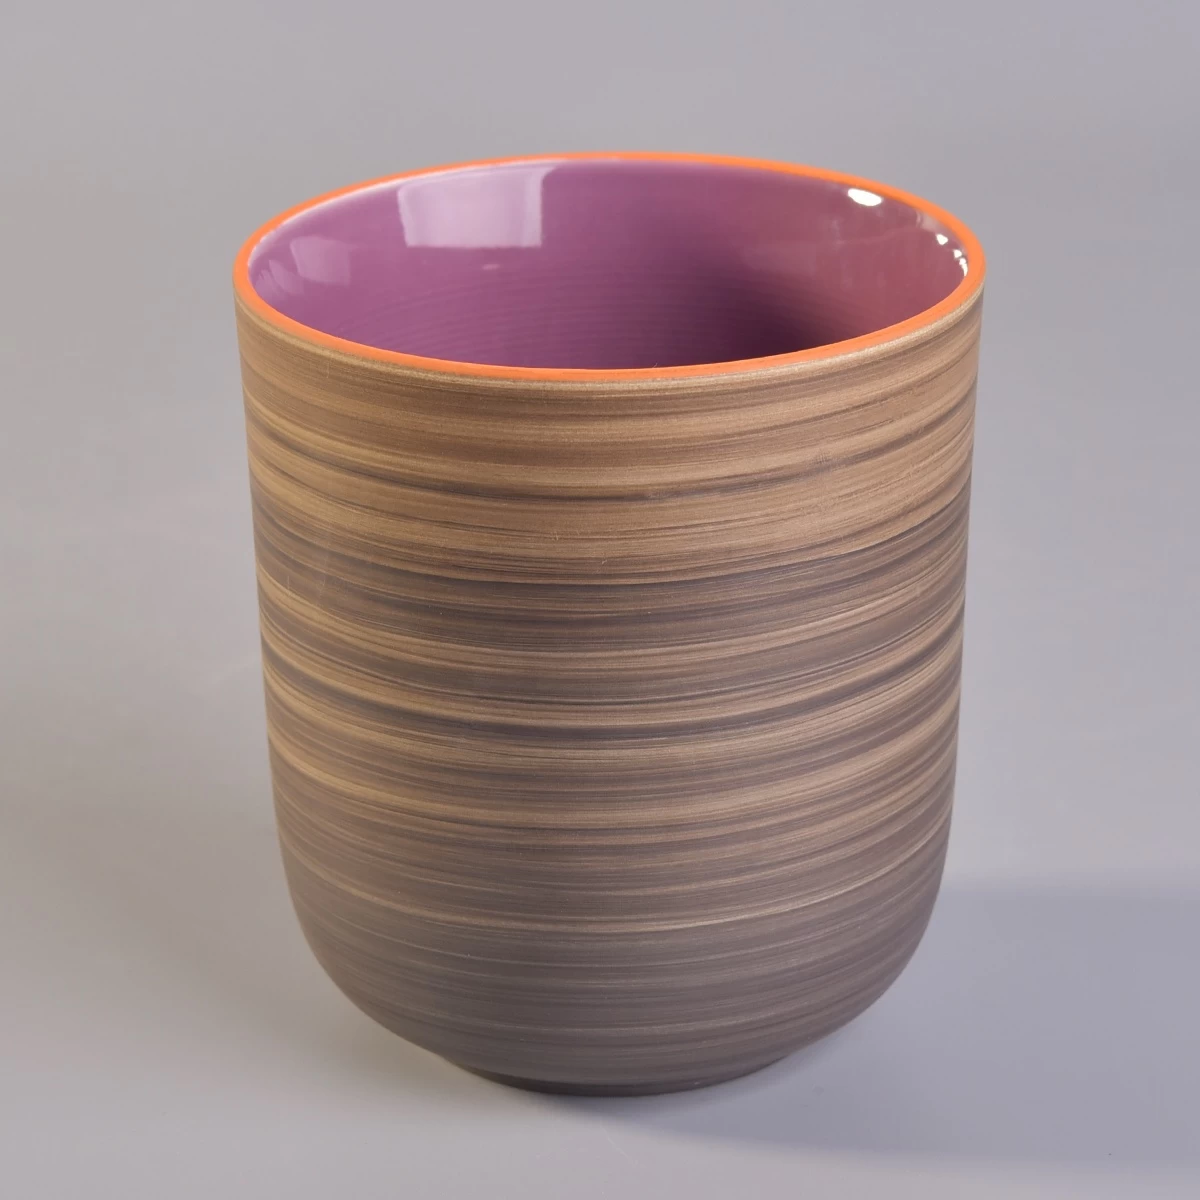 New design amber luxury empty handmade ceramic candle jars 8oz 10oz